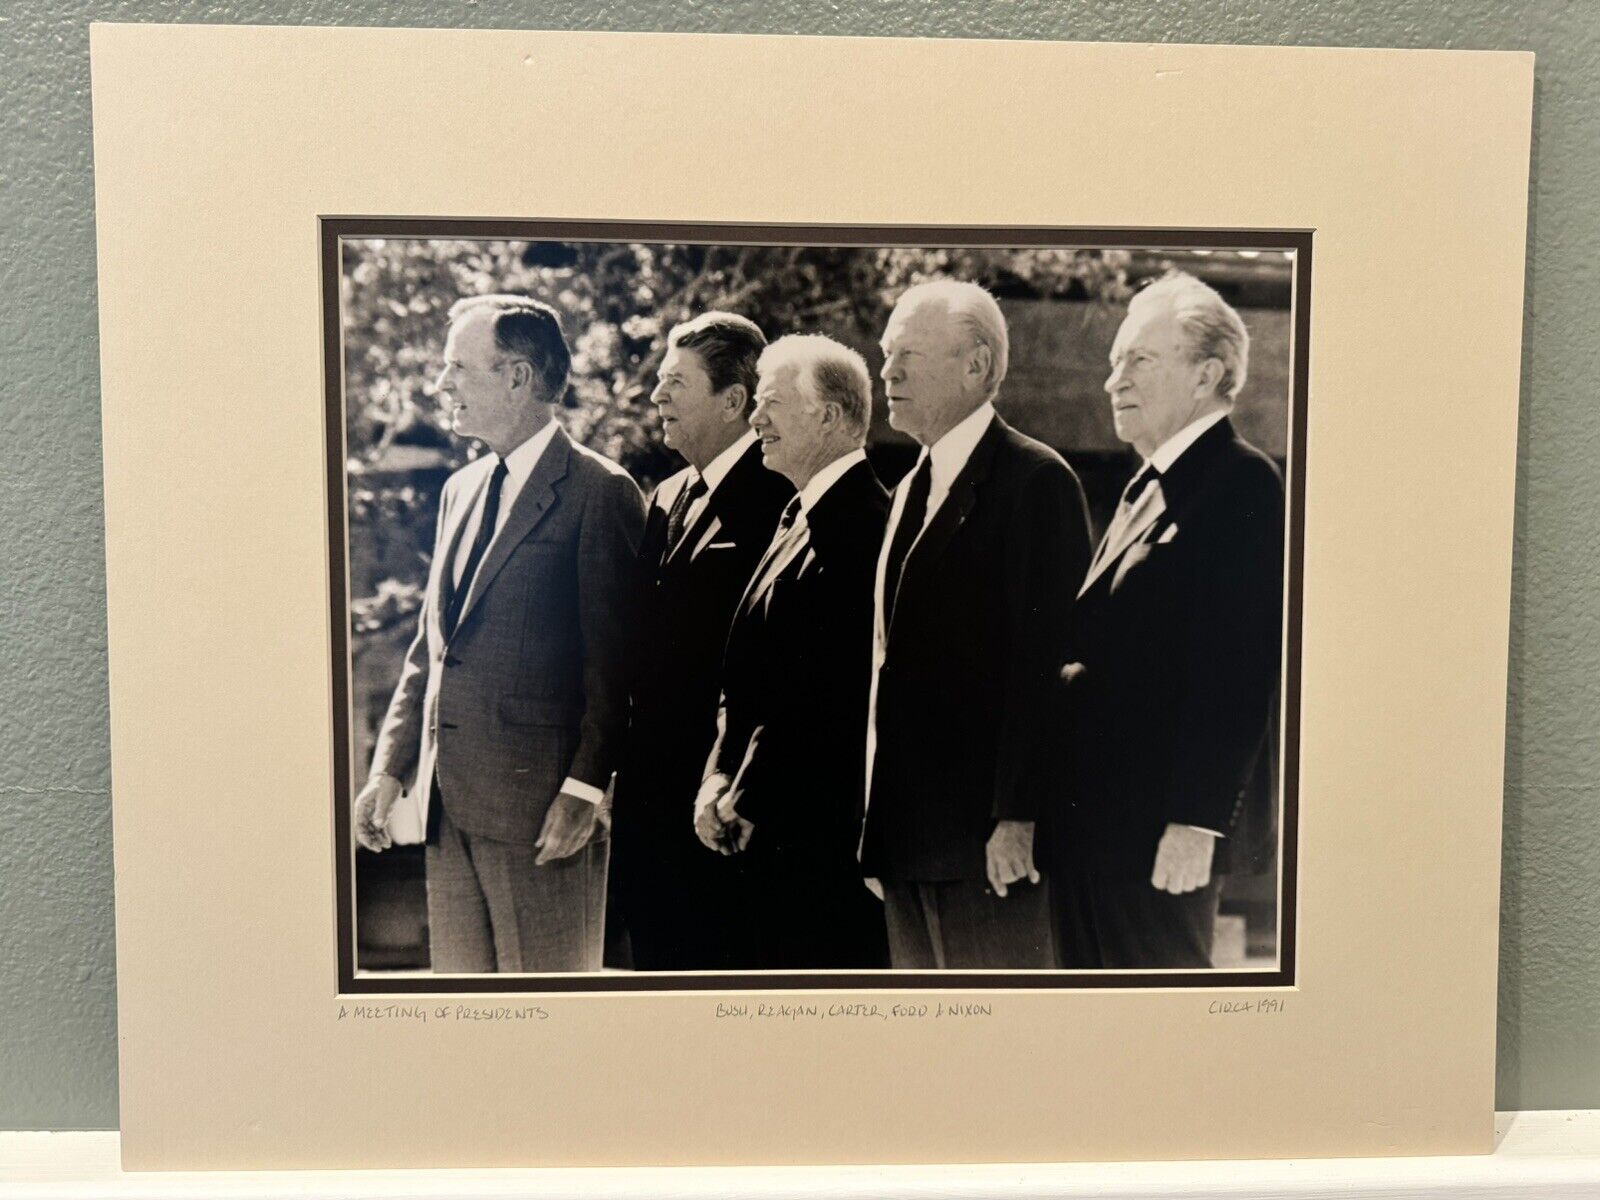 U.S. Presidents Photograph 16x20 - Hand Printed - Sepia Toned - 5 Presidents